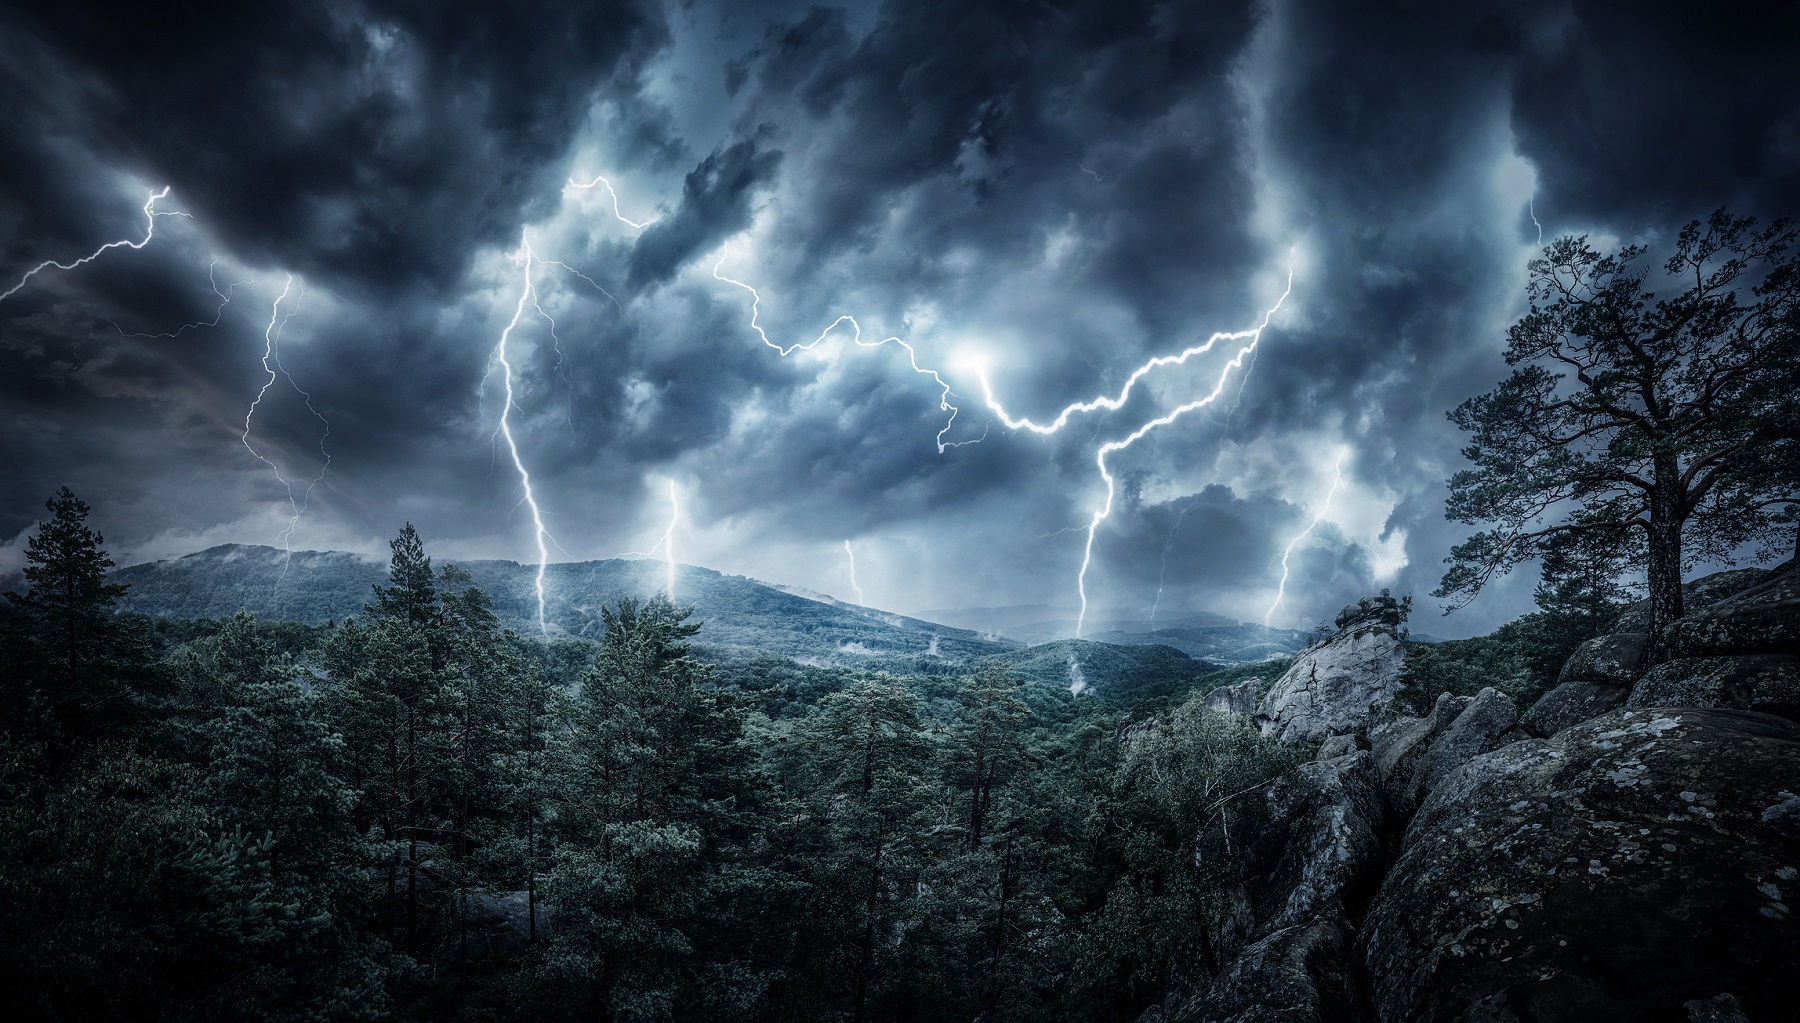 Lightning during a thunderstorm